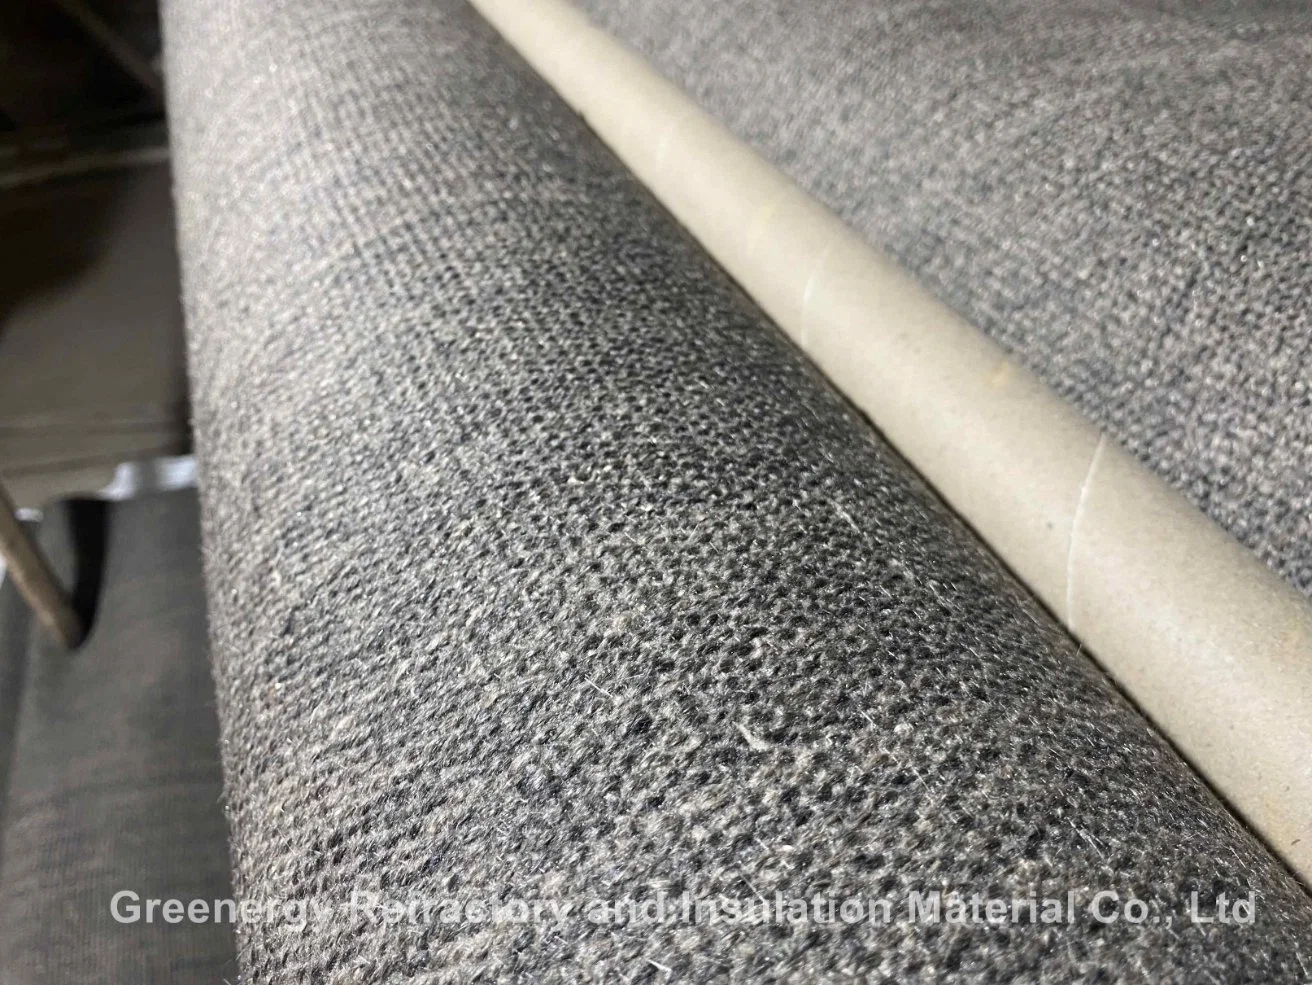 La fibra soluble Bio Greenergy tejido sintetizado de la Junta de sílice Mayorista/Proveedor de material de aislamiento térmico de fibra de cerámica refractaria